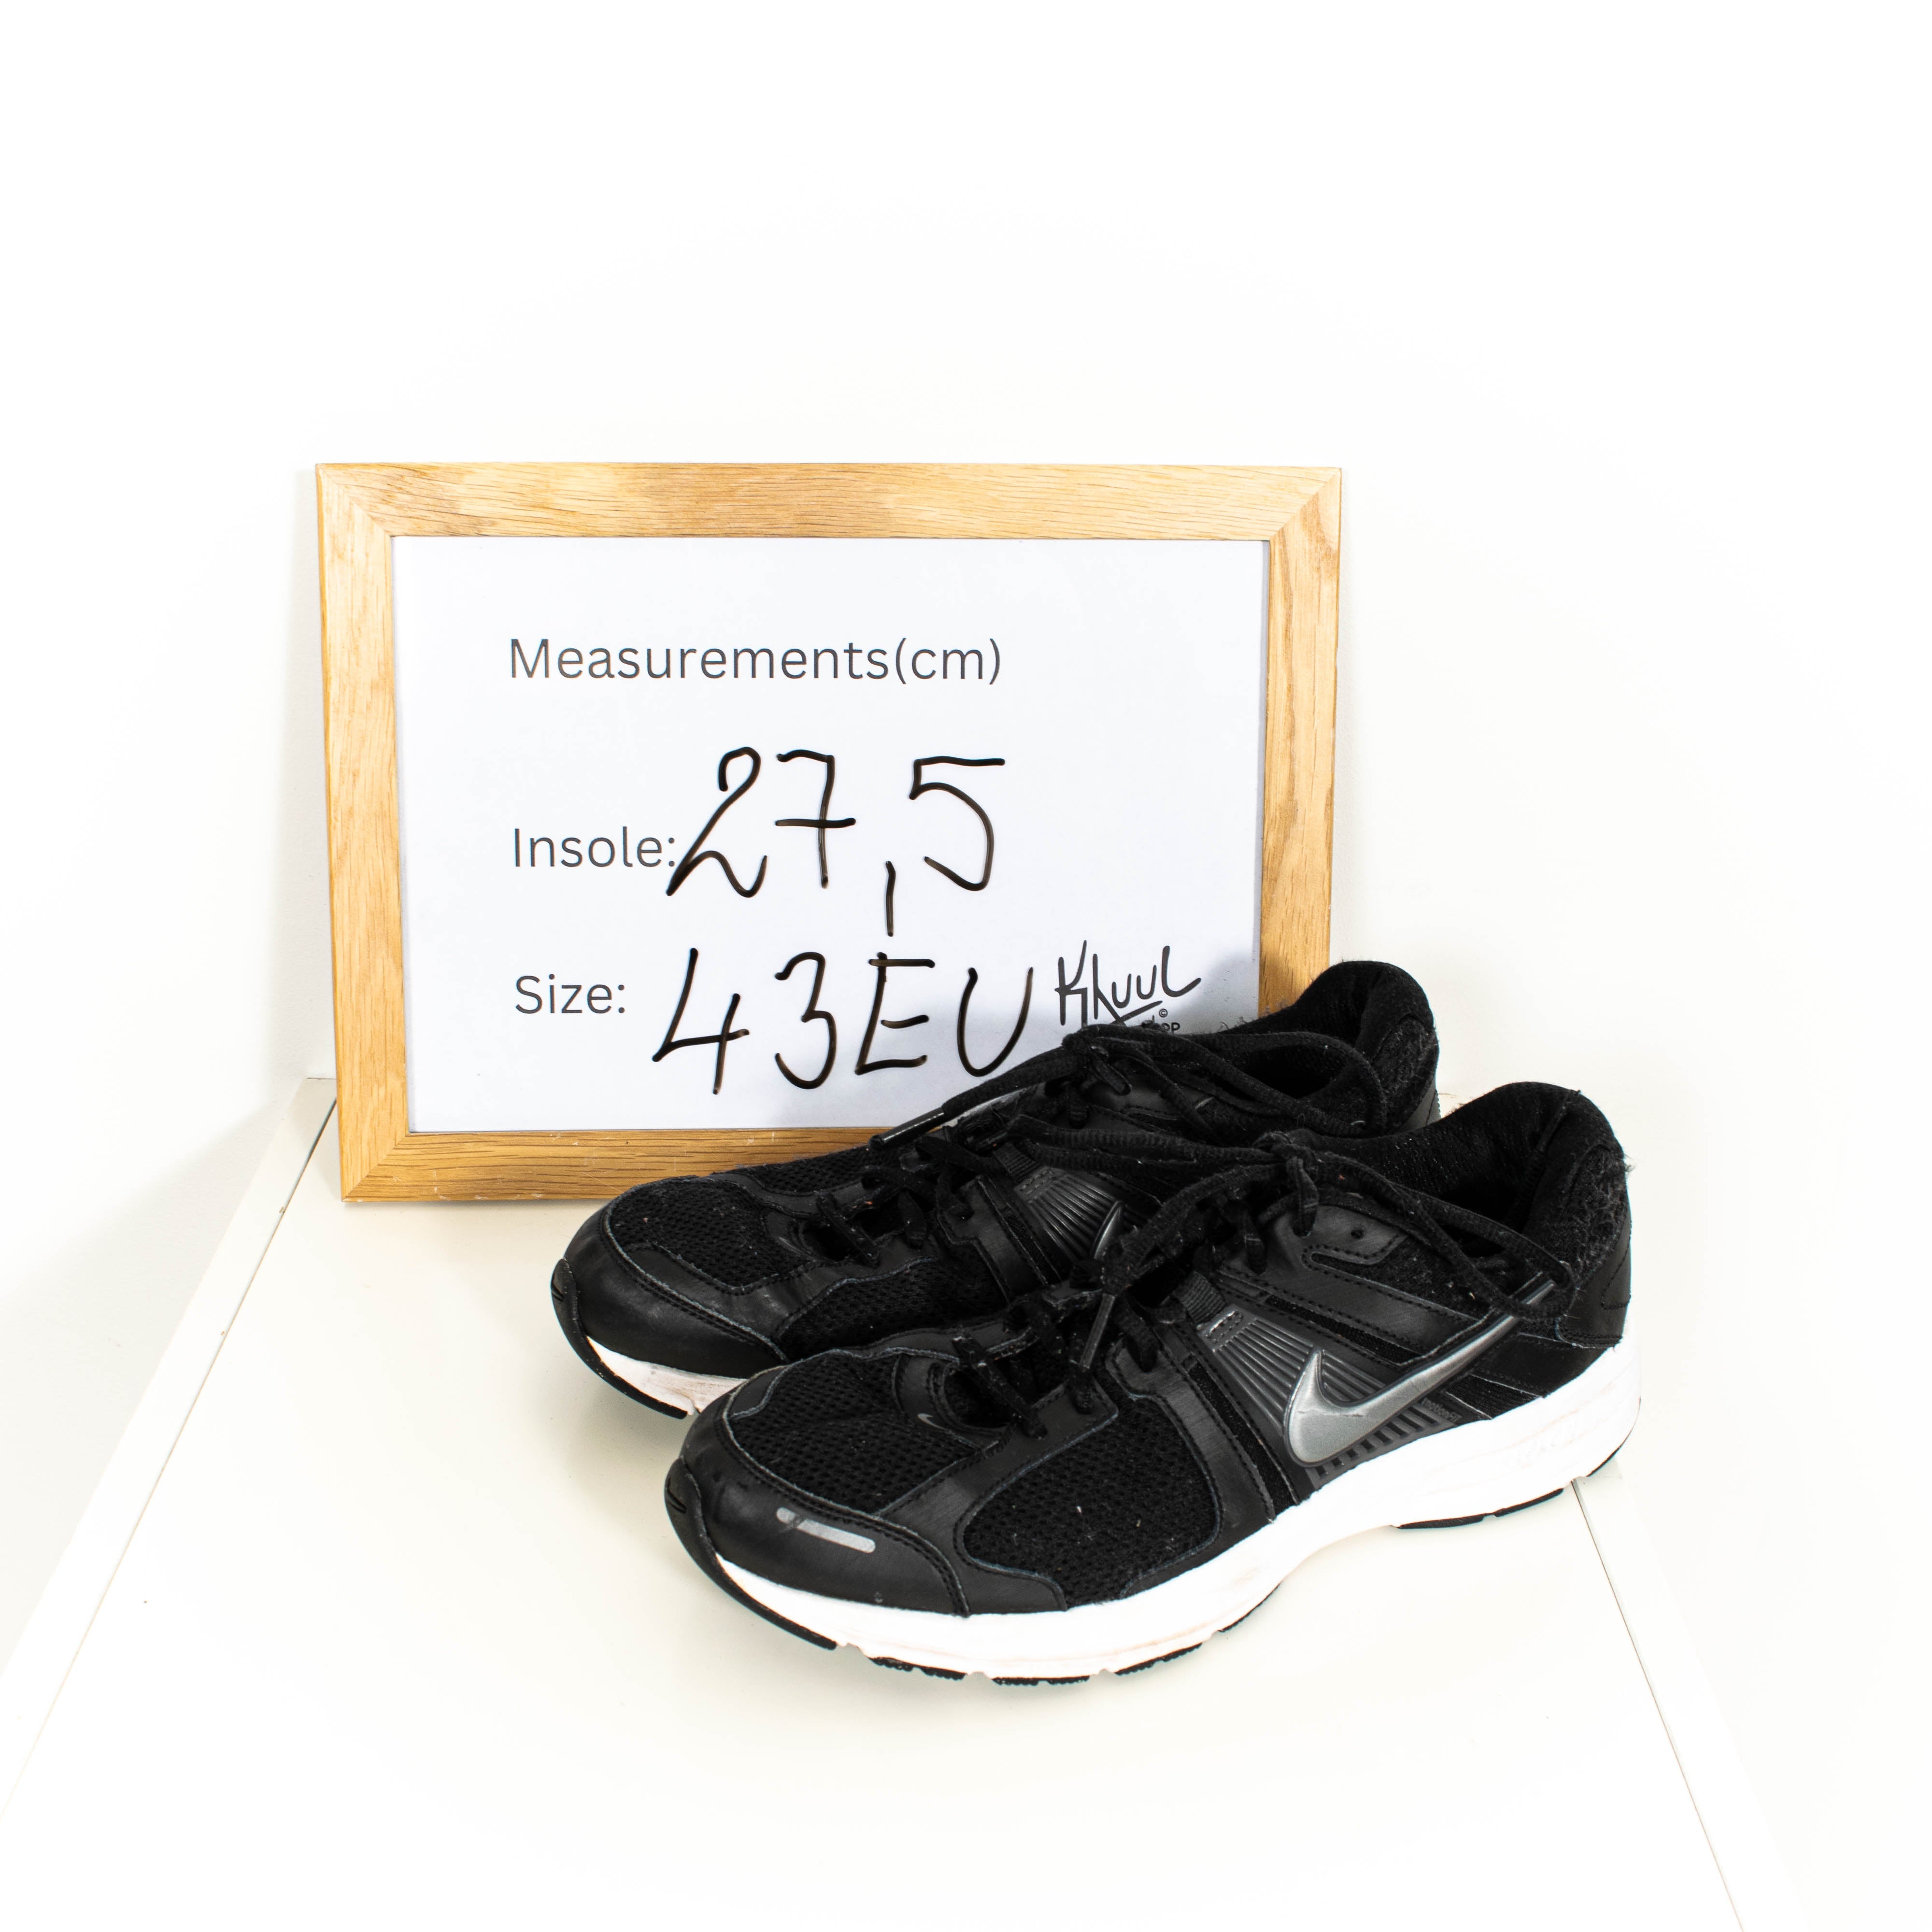 Nike Black Dart 10 Lace Up Low Top Running Sneakers Mens EU43